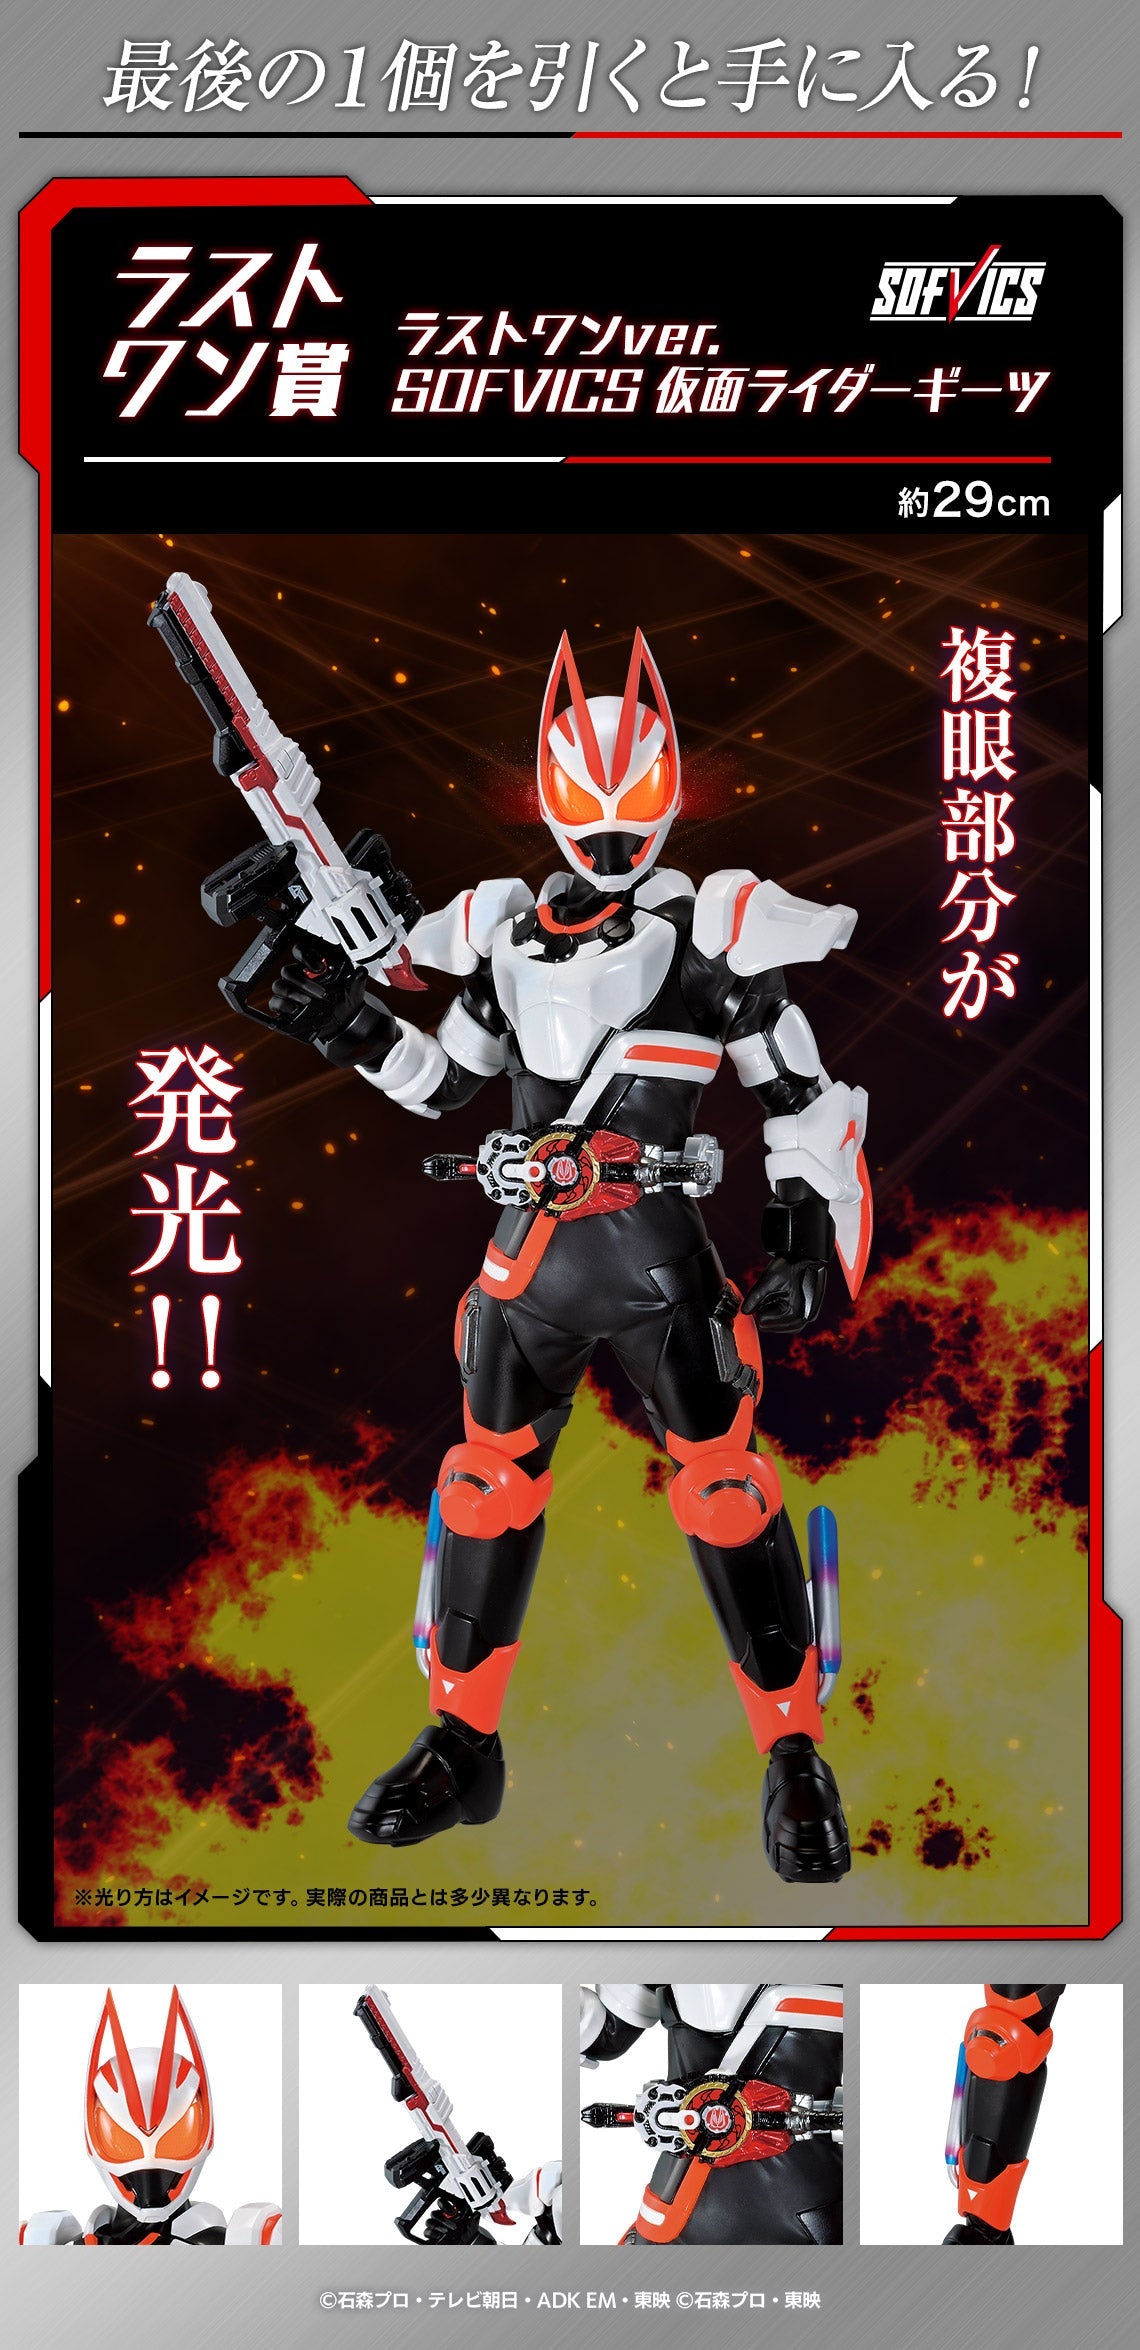 Ichiban Kuji Kamen Rider Geats With Legend Kamen Rider ~ Next Battle!-Bandai-Ace Cards &amp; Collectibles